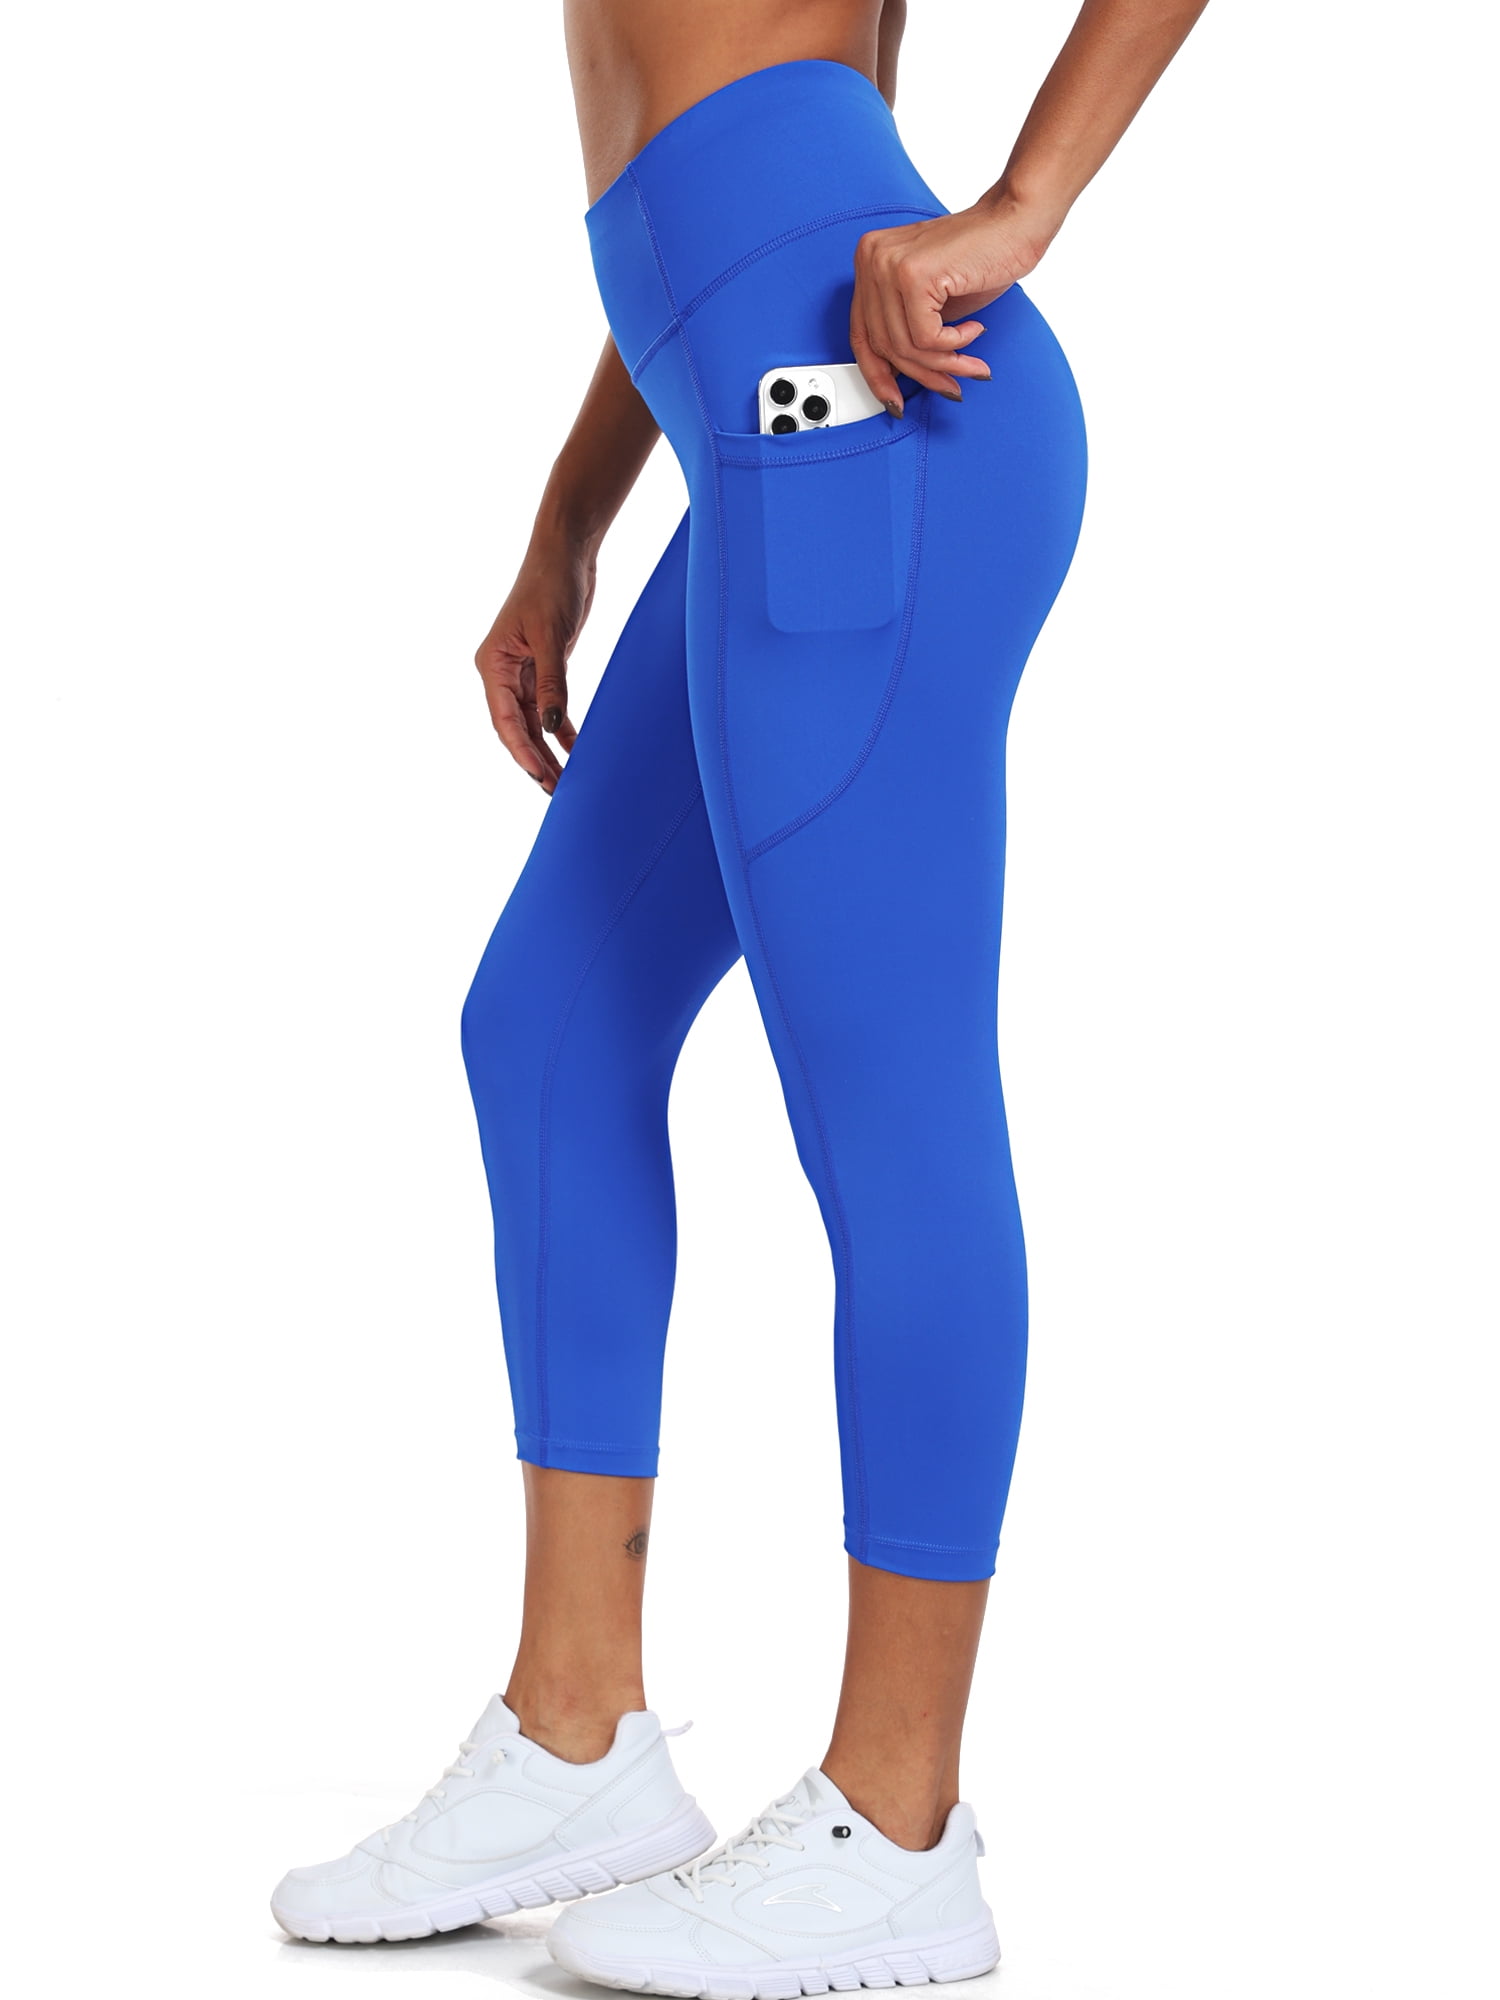 VSSSJ Yoga Pants for Women Regular Fit Solid Color Pocket Hip Lift Fitness  Stretch Tights Tummy Control Workout Gym Yoga High Waist Soft Skinny  Leggings Purple L 